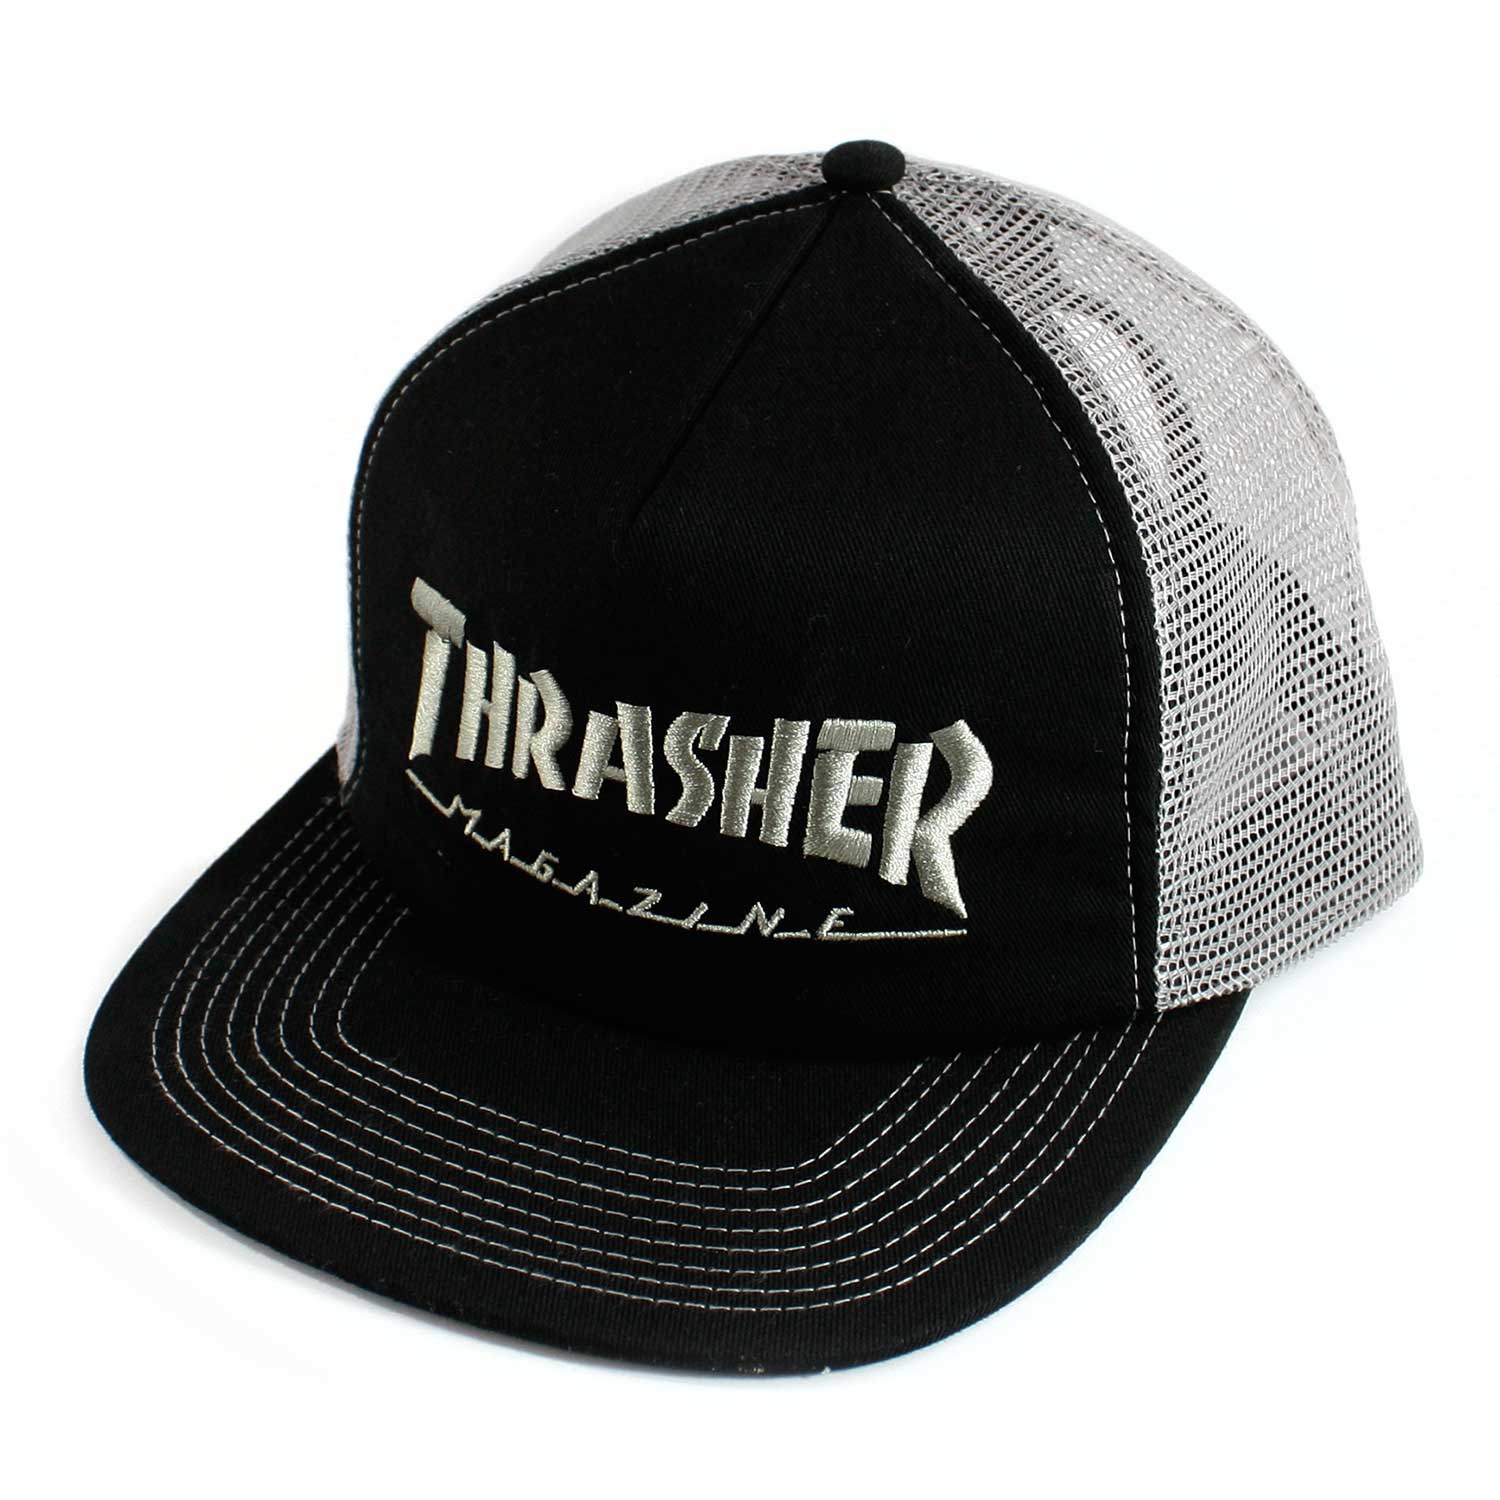 Thrasher Mesh Trucker Cap Logo Embroidered (black grey)